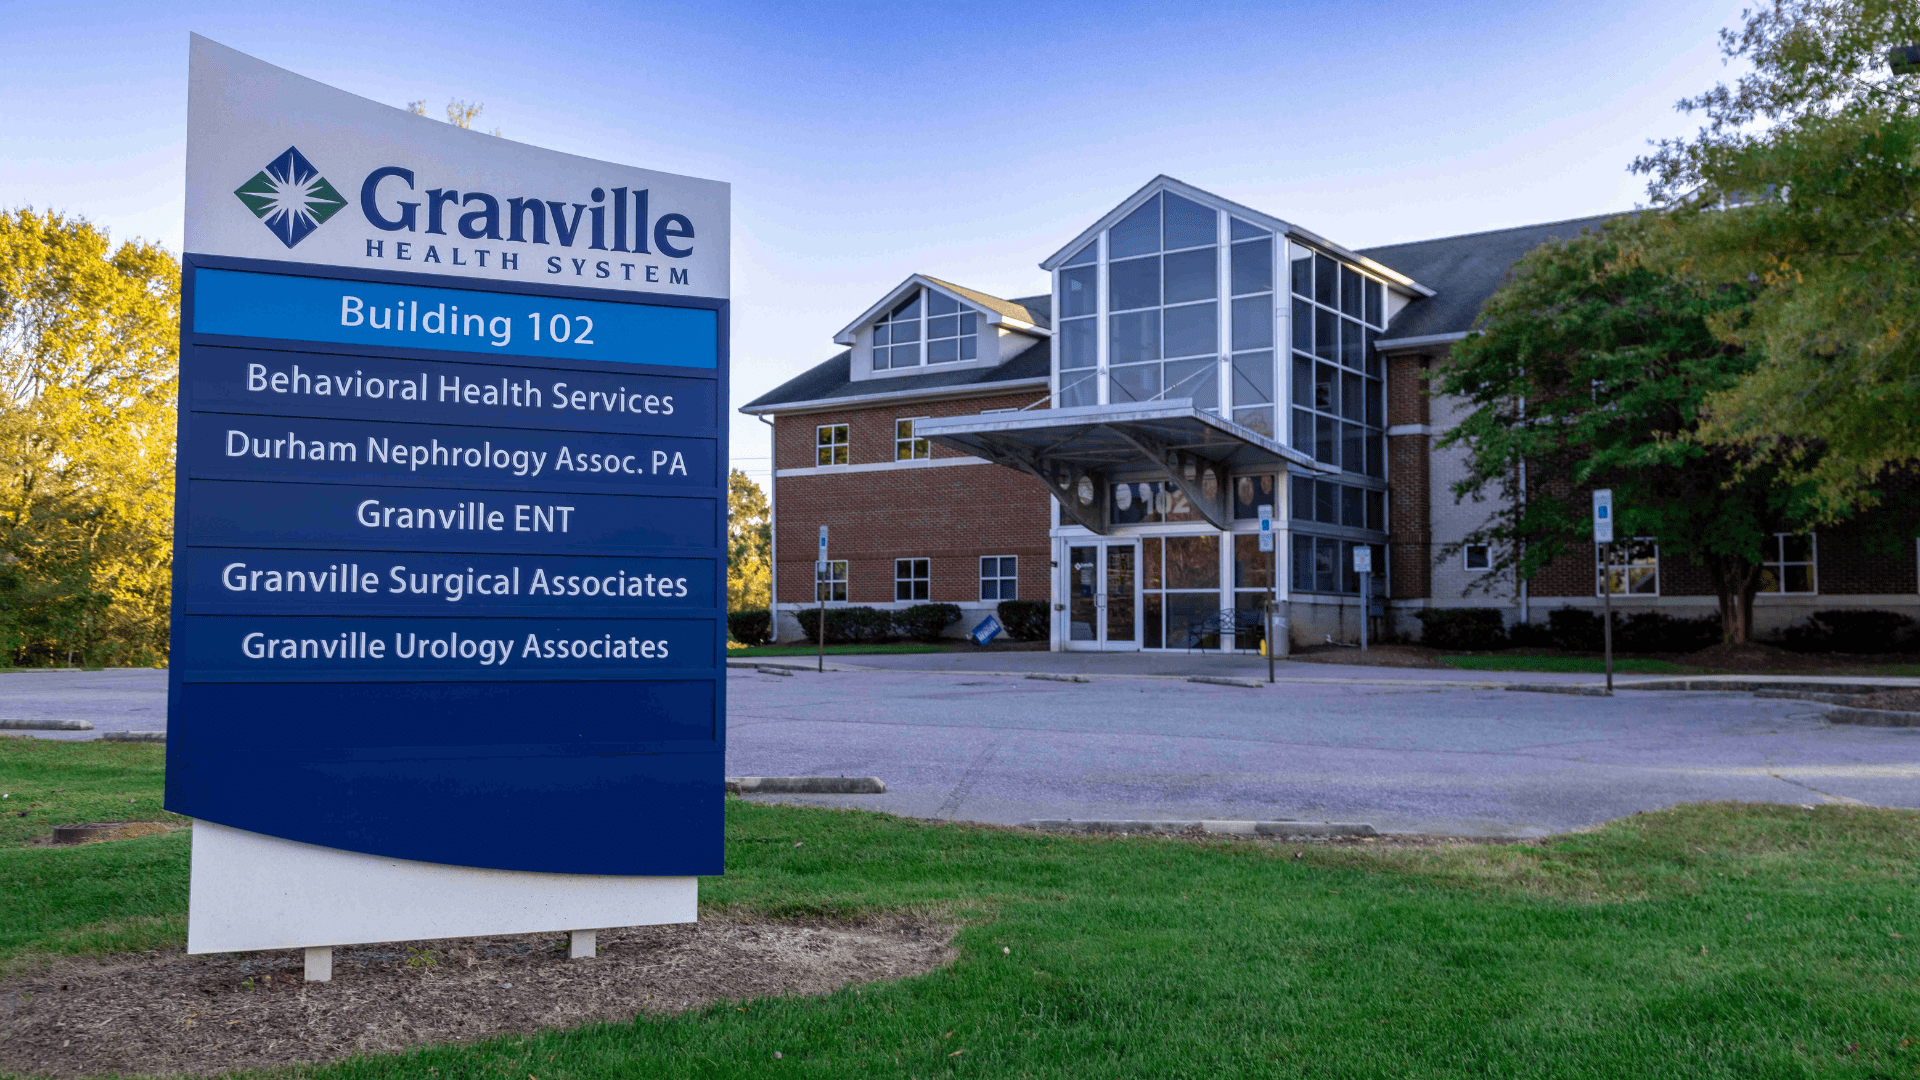 Front of Granville Health System facility housing Behavioral Health Services, Granville ENT, Granville Surgical Associates, and Granville Urology Associates